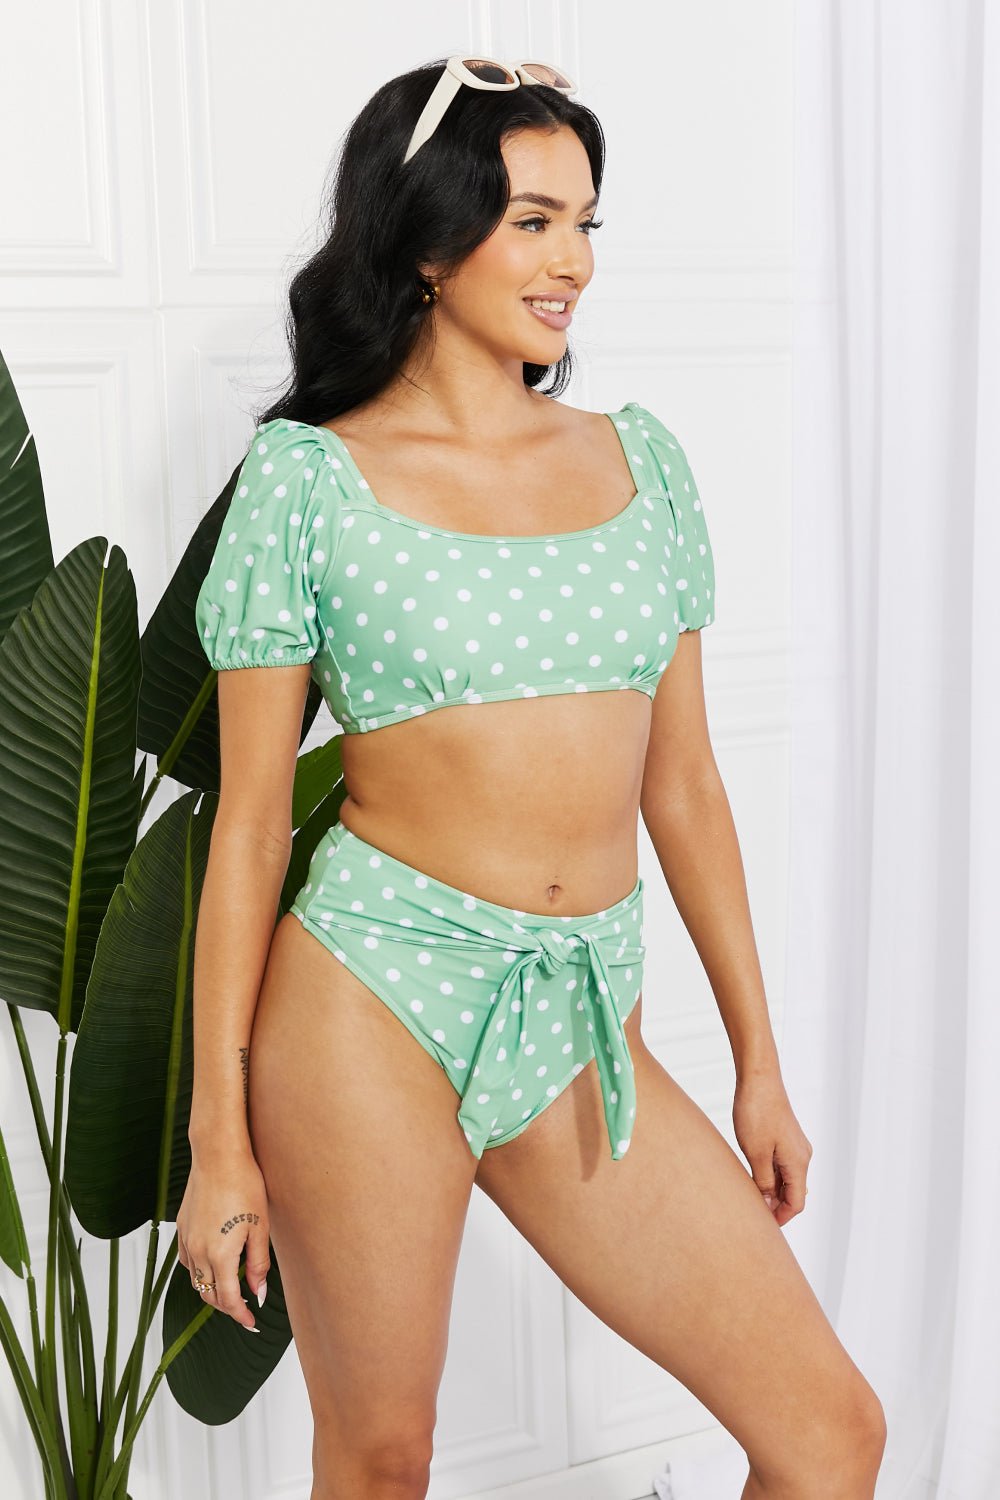 Marina West Swim Vacay Ready Puff Sleeve Bikini in Gum Leaf - Happily Ever Atchison Shop Co.